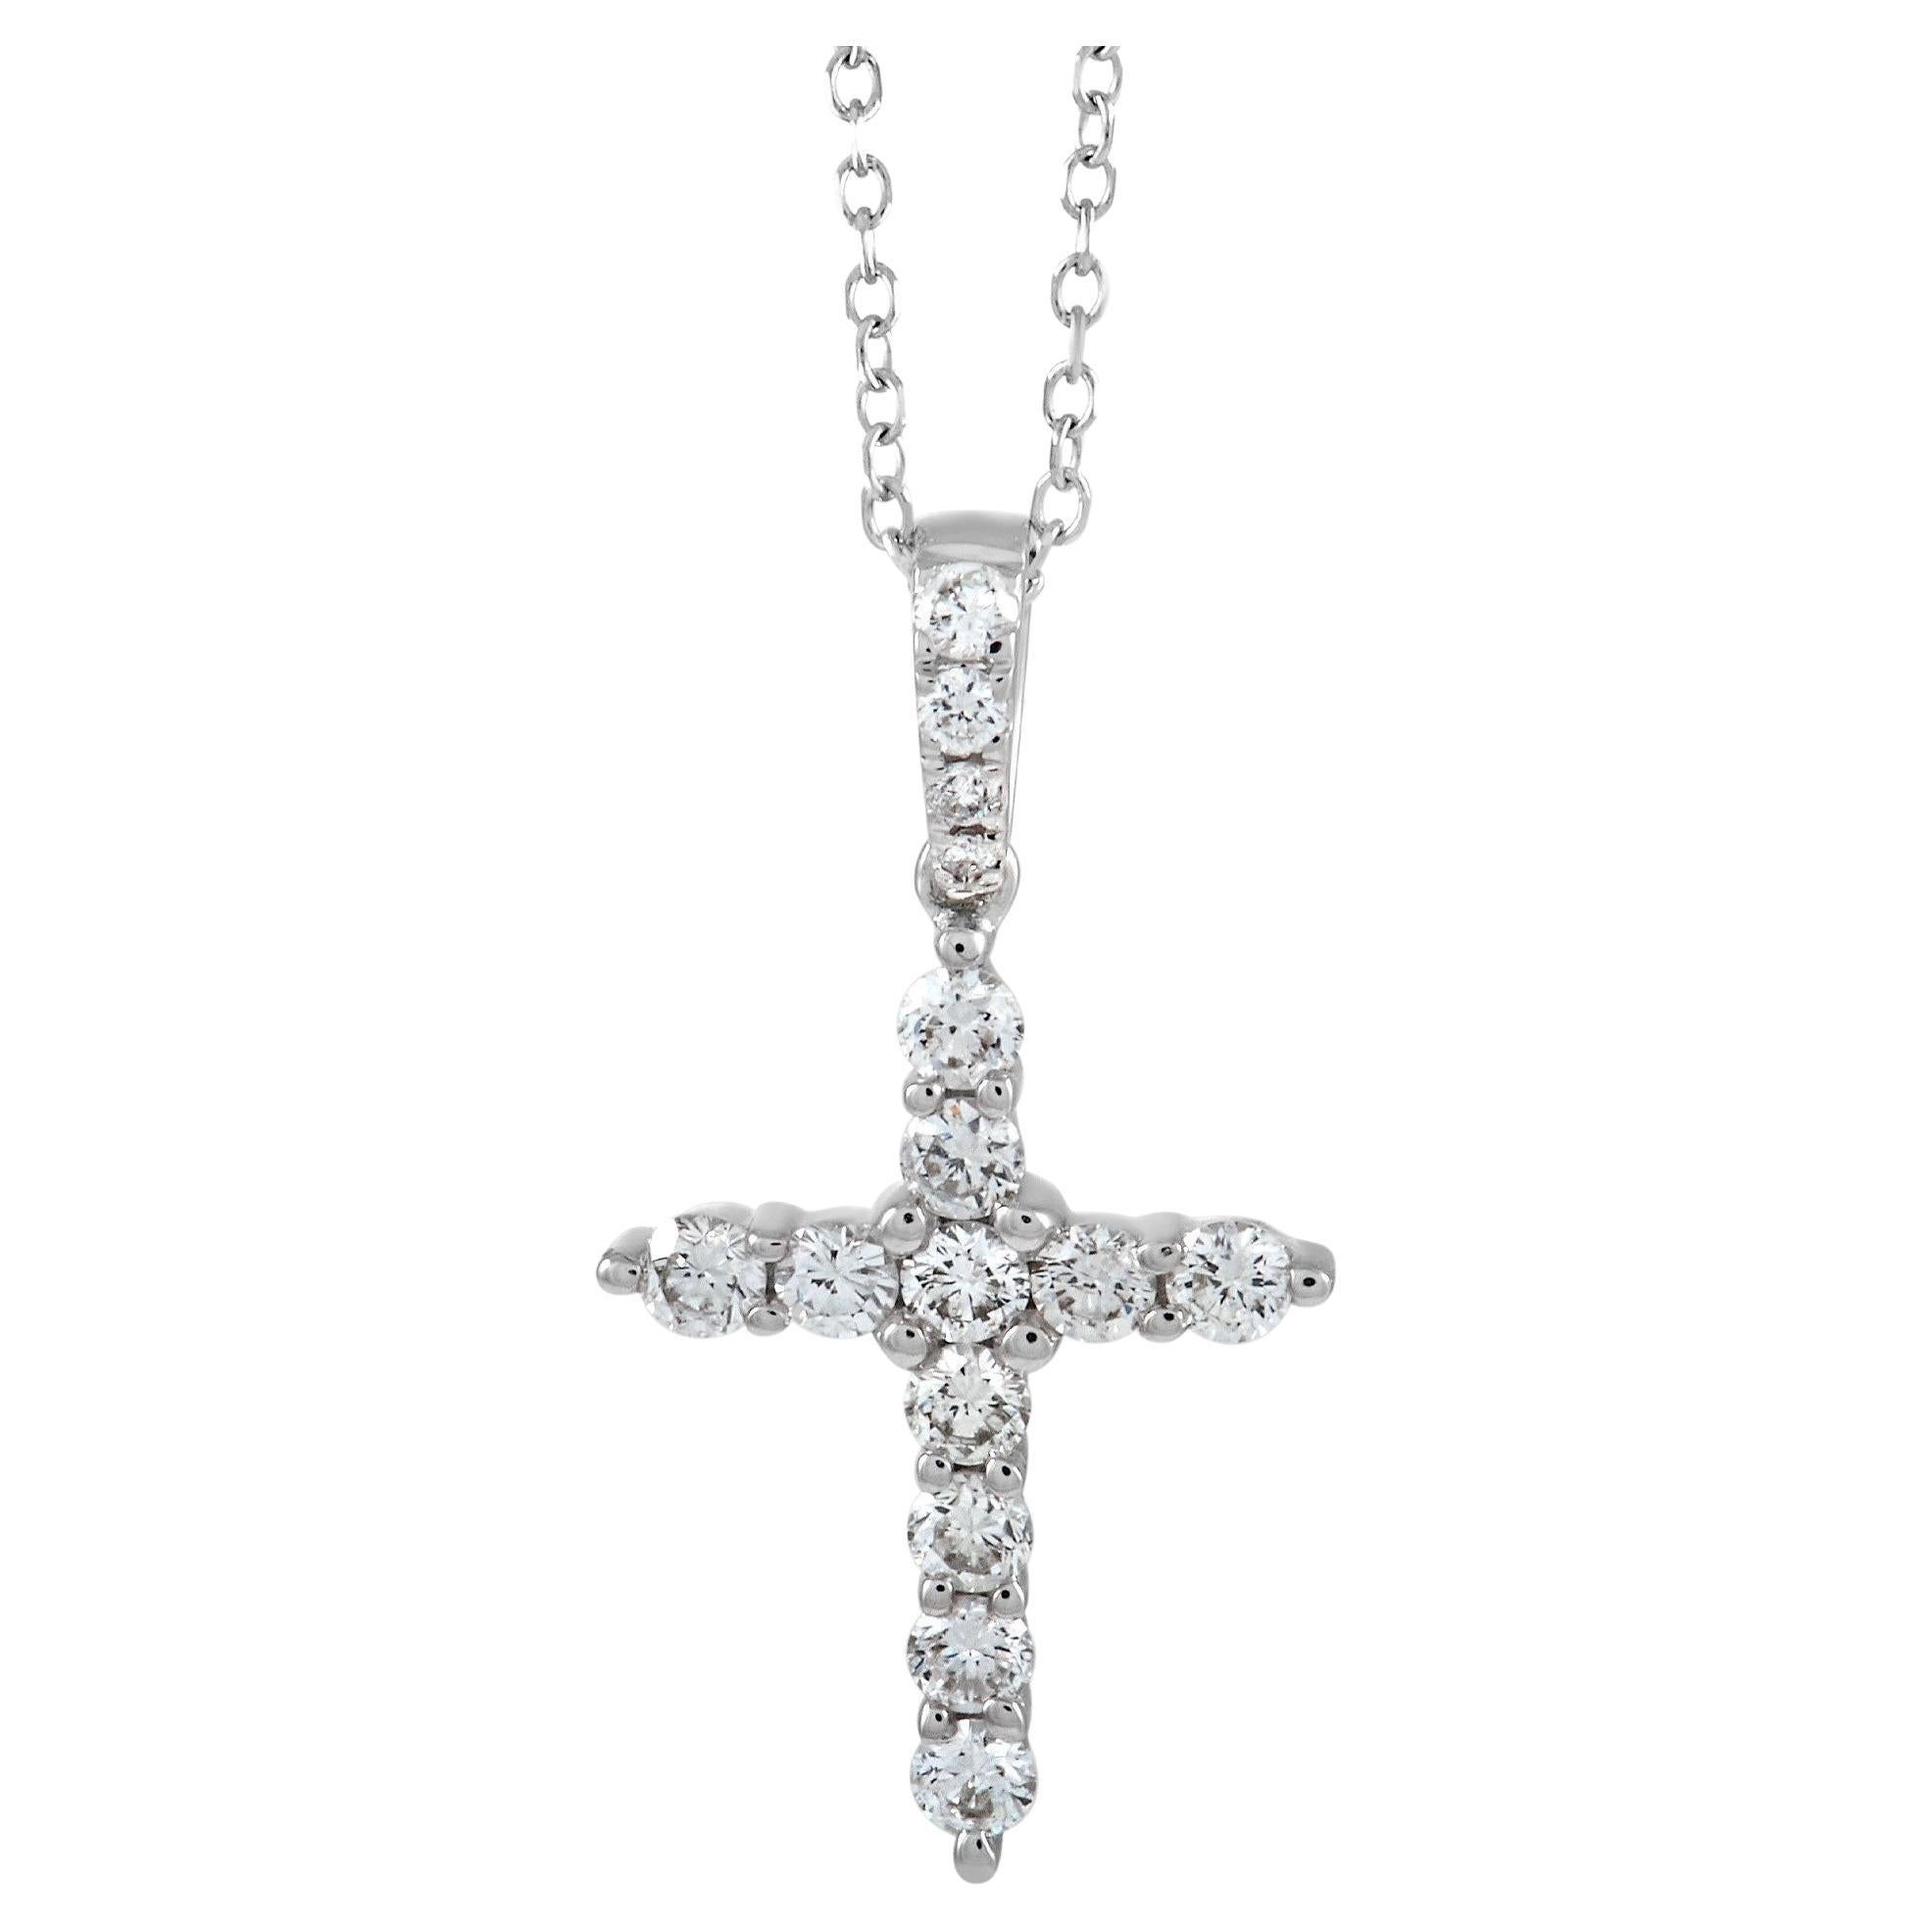 LB Exclusive 18K White Gold 0.38 Ct Diamond Cross Pendant Necklace